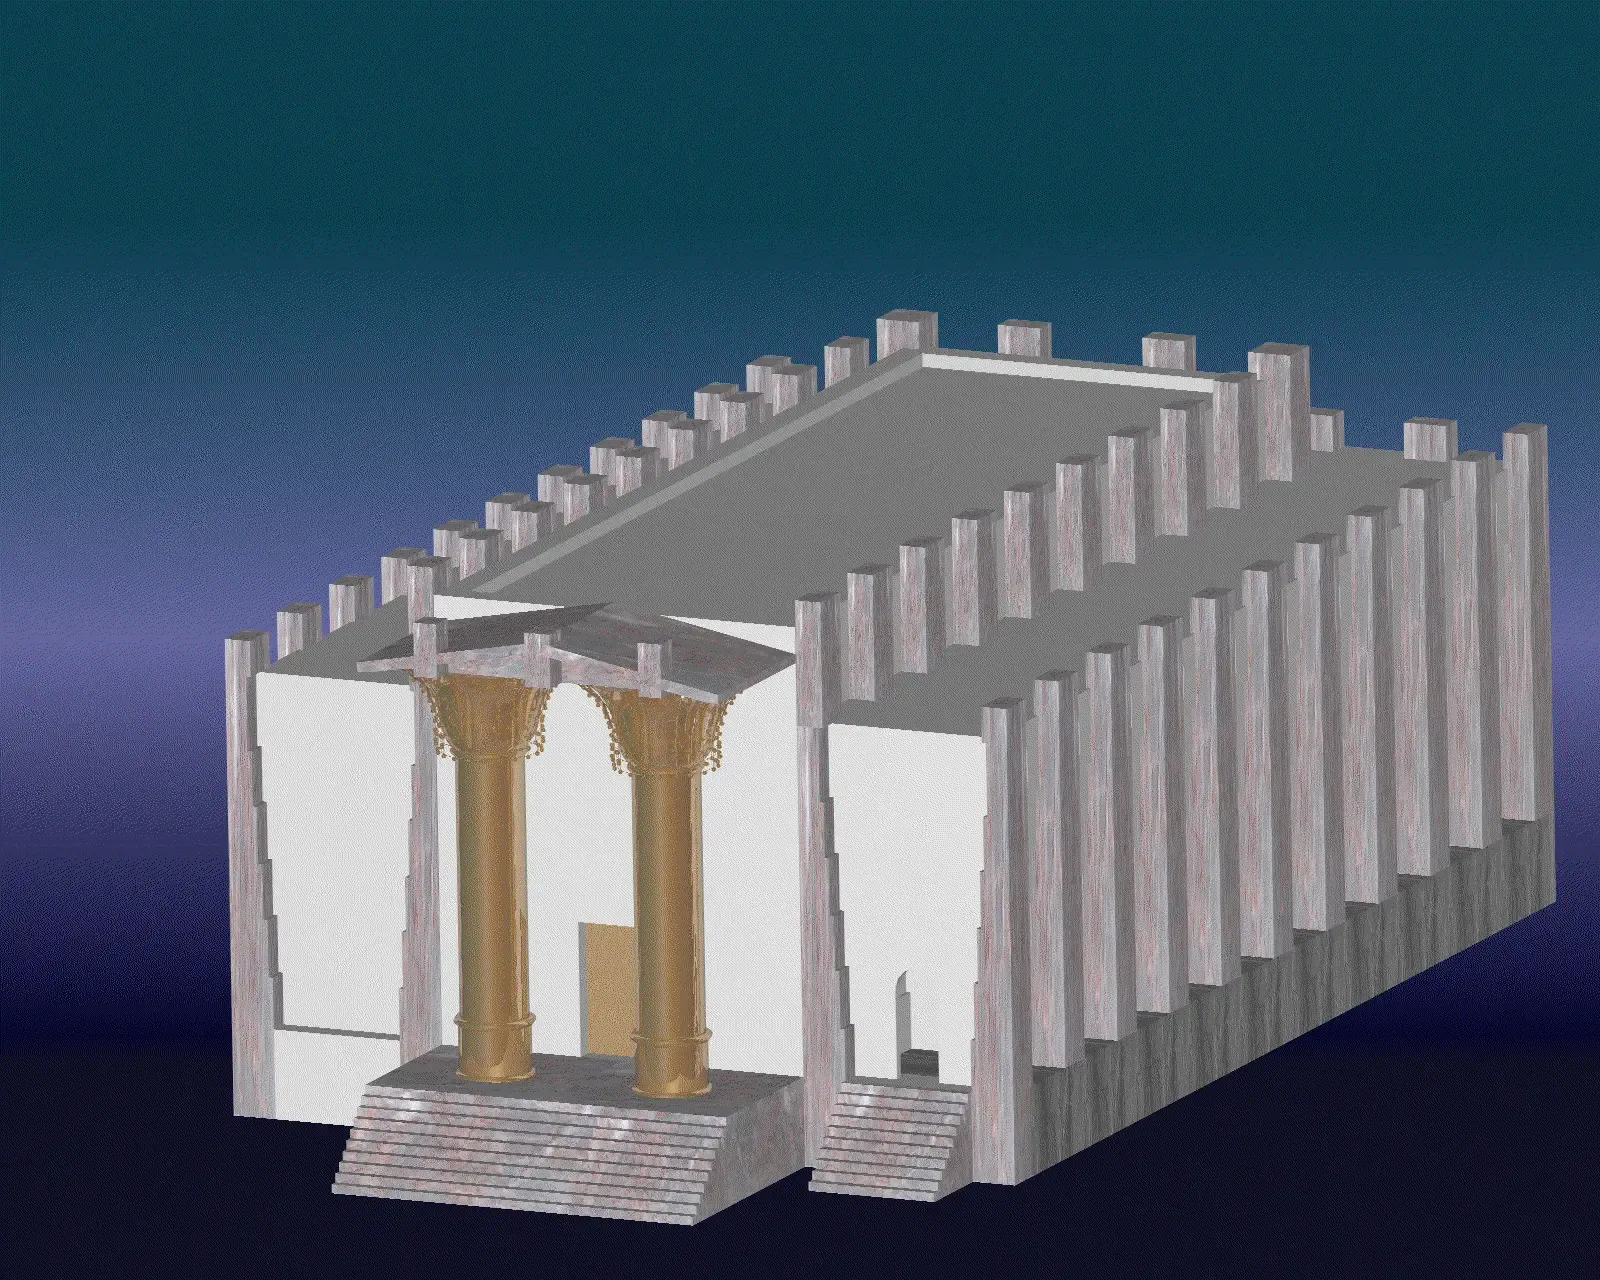 Solomon's Temple 955BC (my personal view)